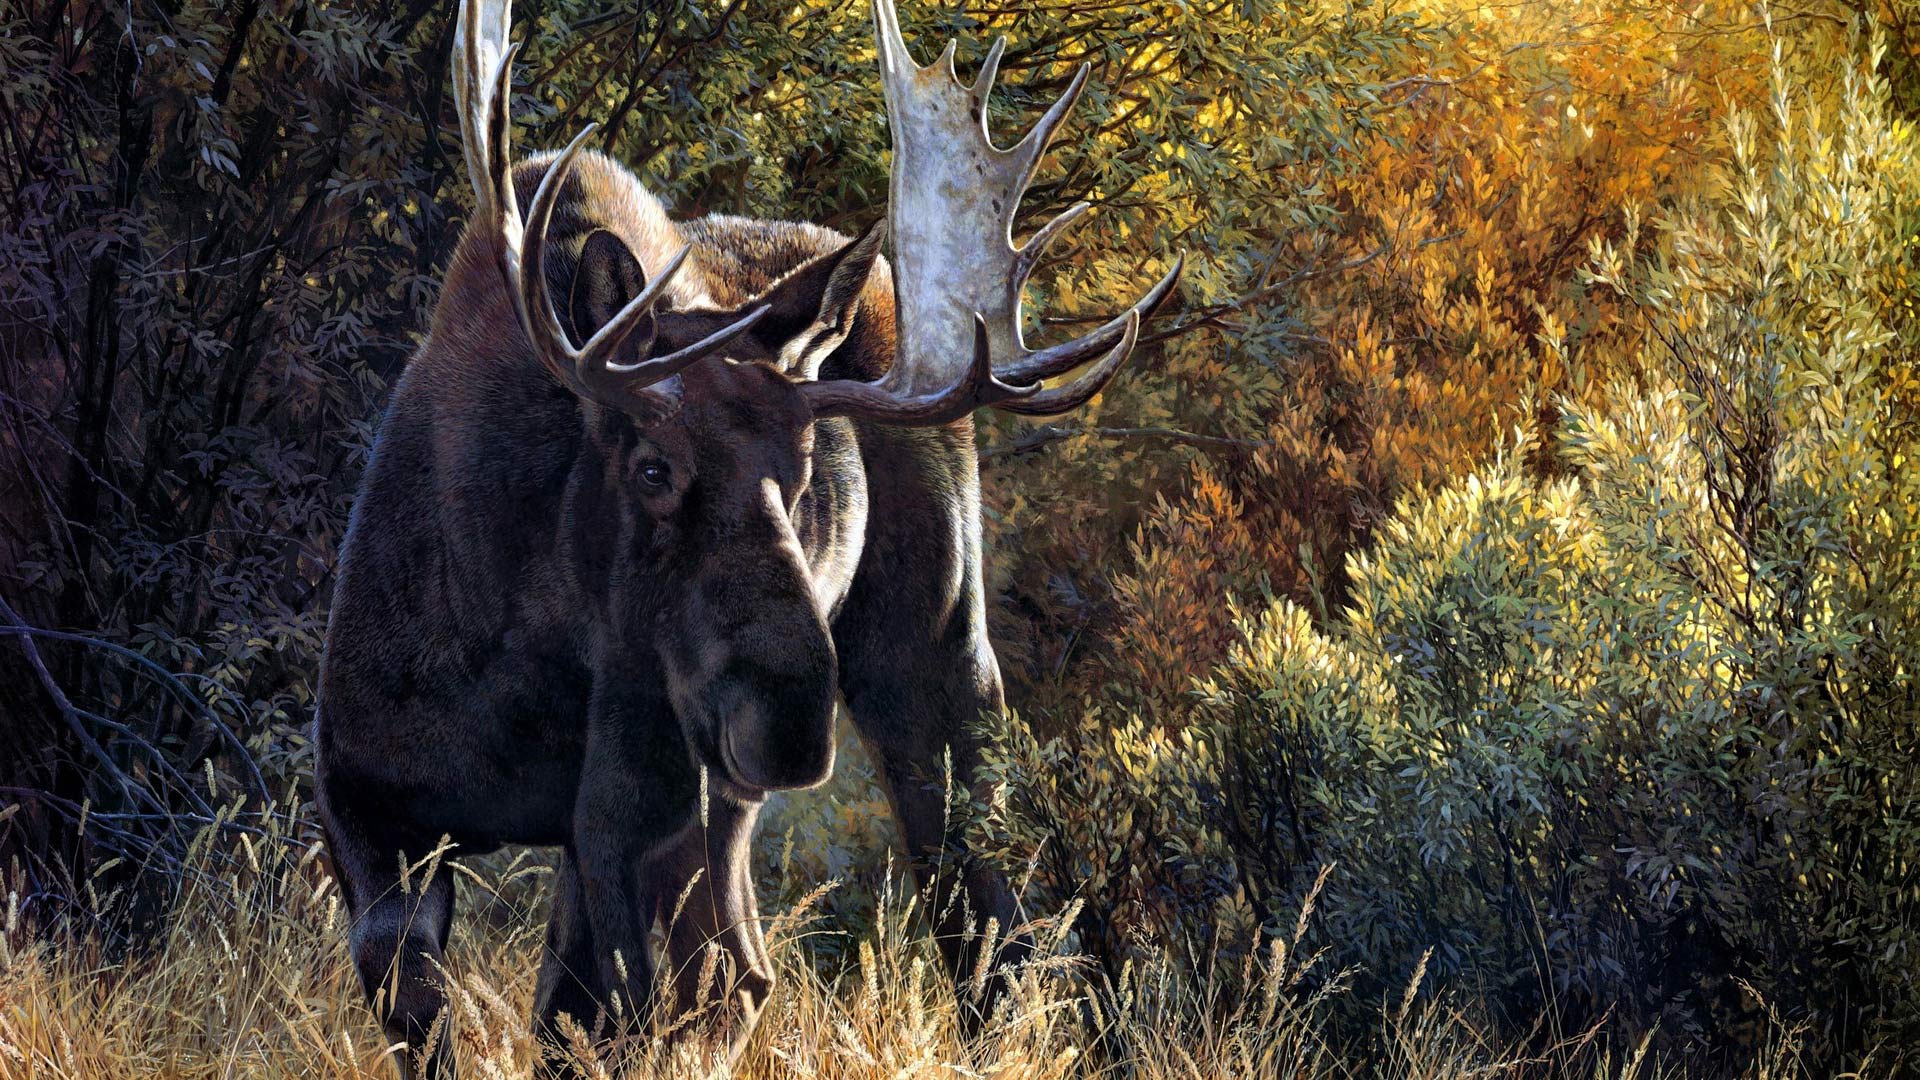 Moose HD Wallpaper. Moose Desktop Wallpaper and Picture. Cool